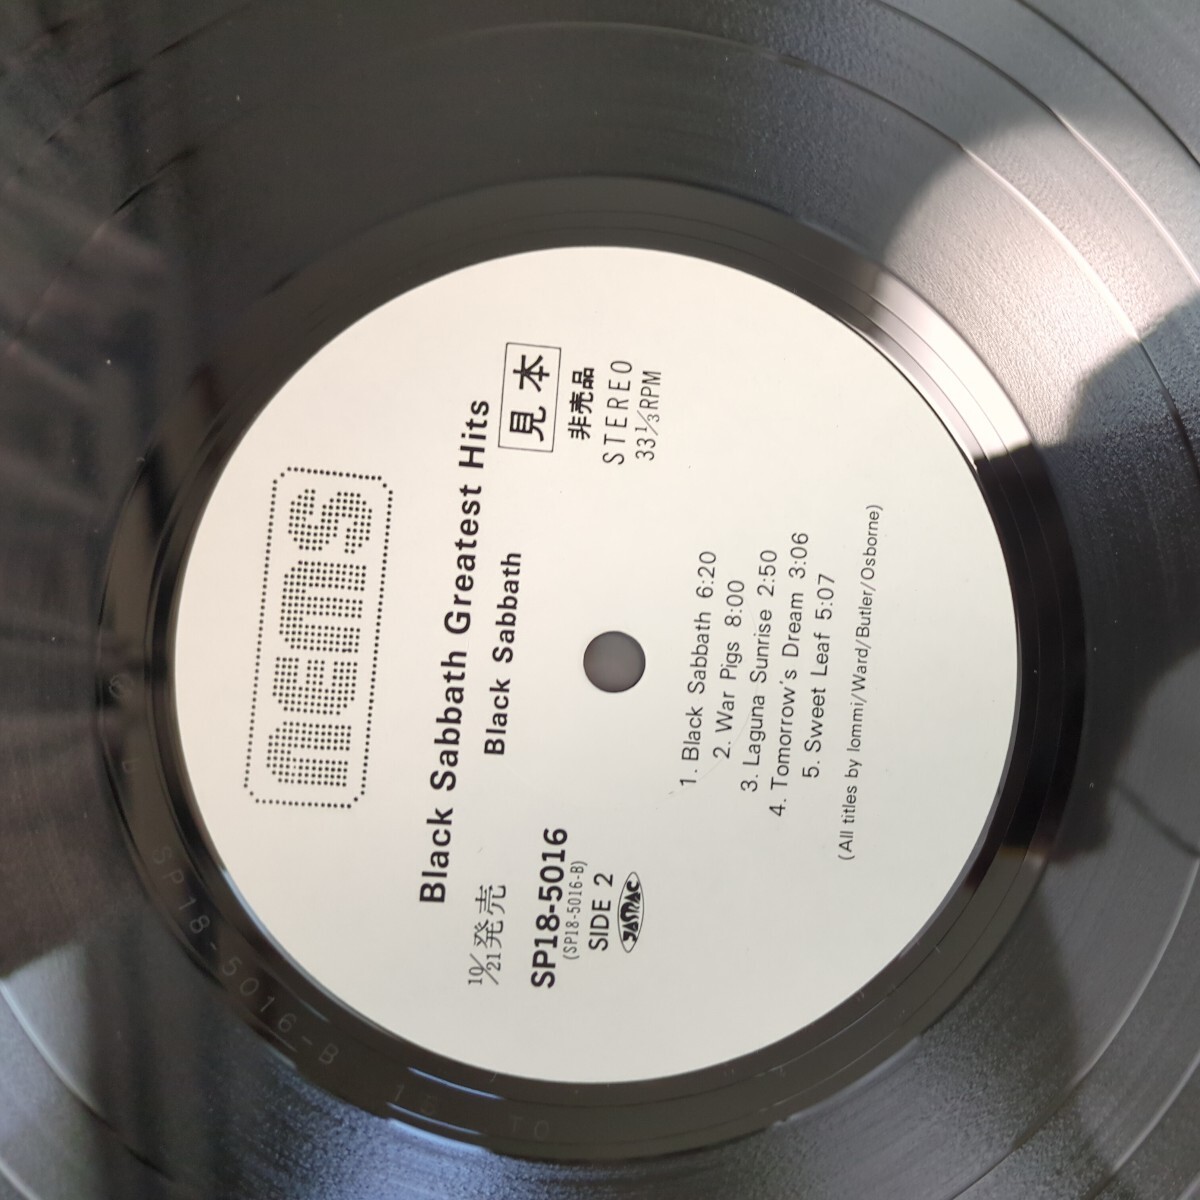 PROMO sample 見本盤 サンプル Black Sabbath Greatest Hits ブラック・サバス ozzy osbourne record レコード LP アナログ vinyl_画像5